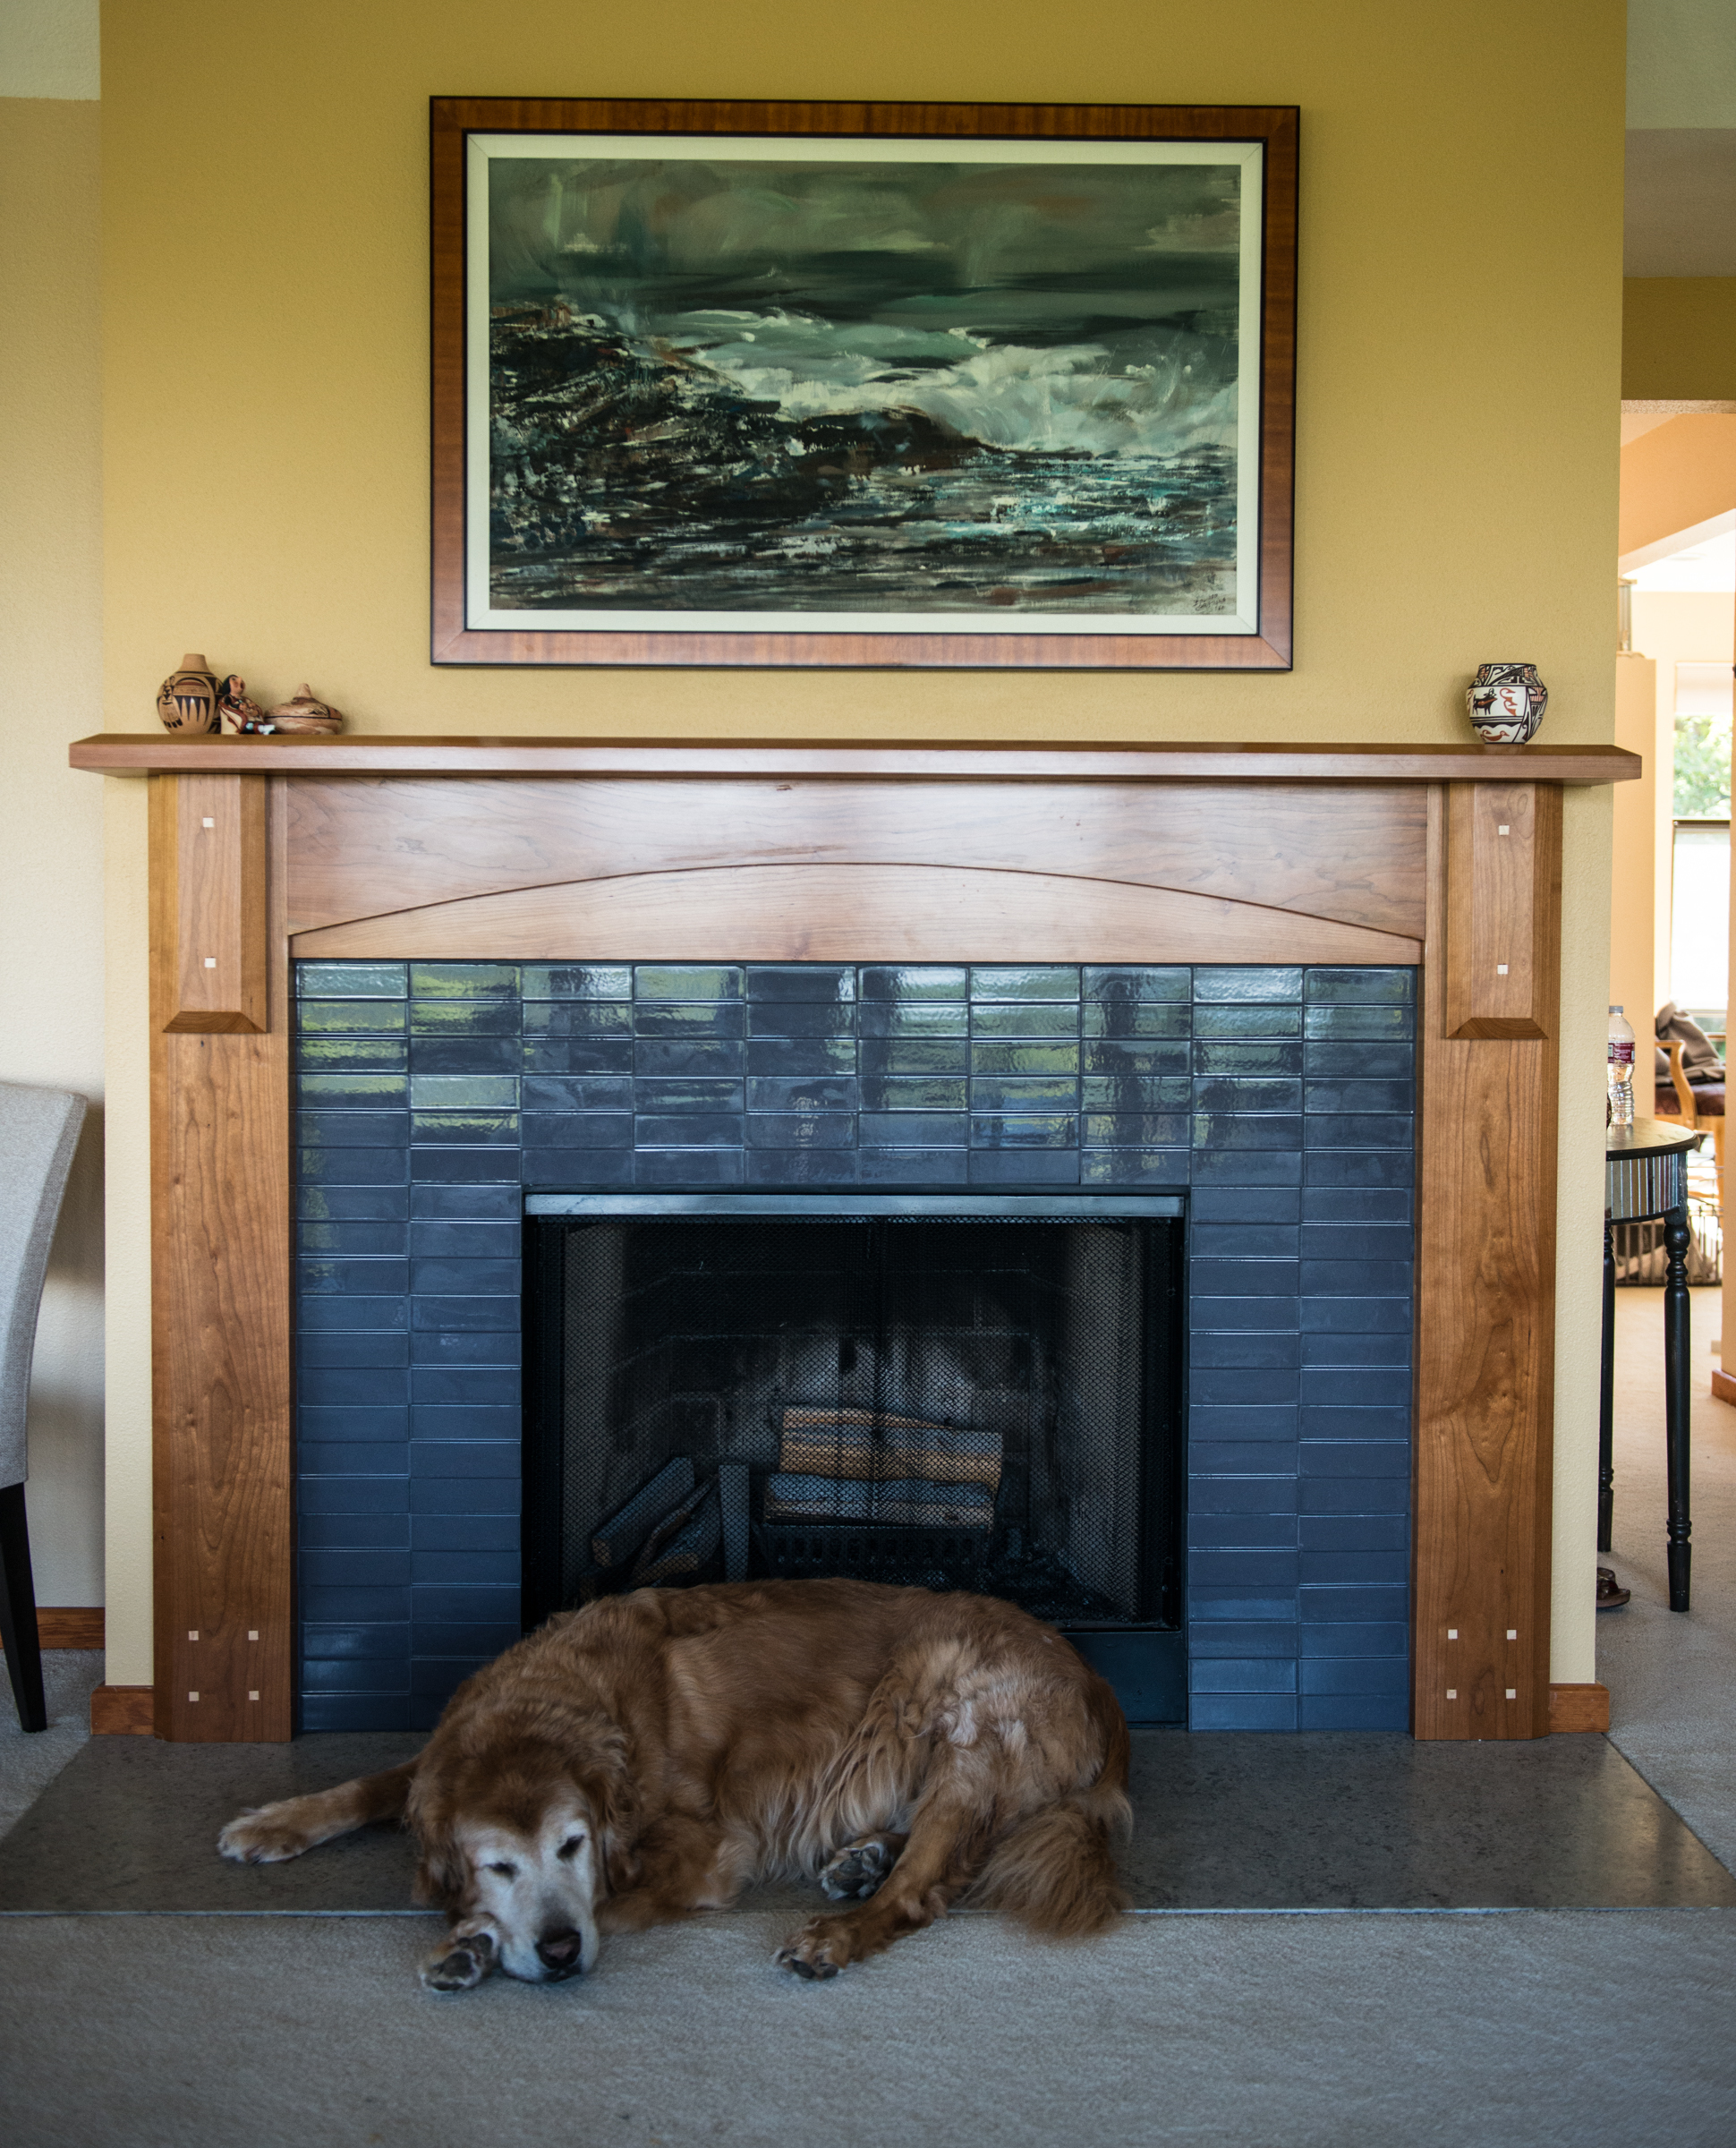 Fireplace with dog.jpg